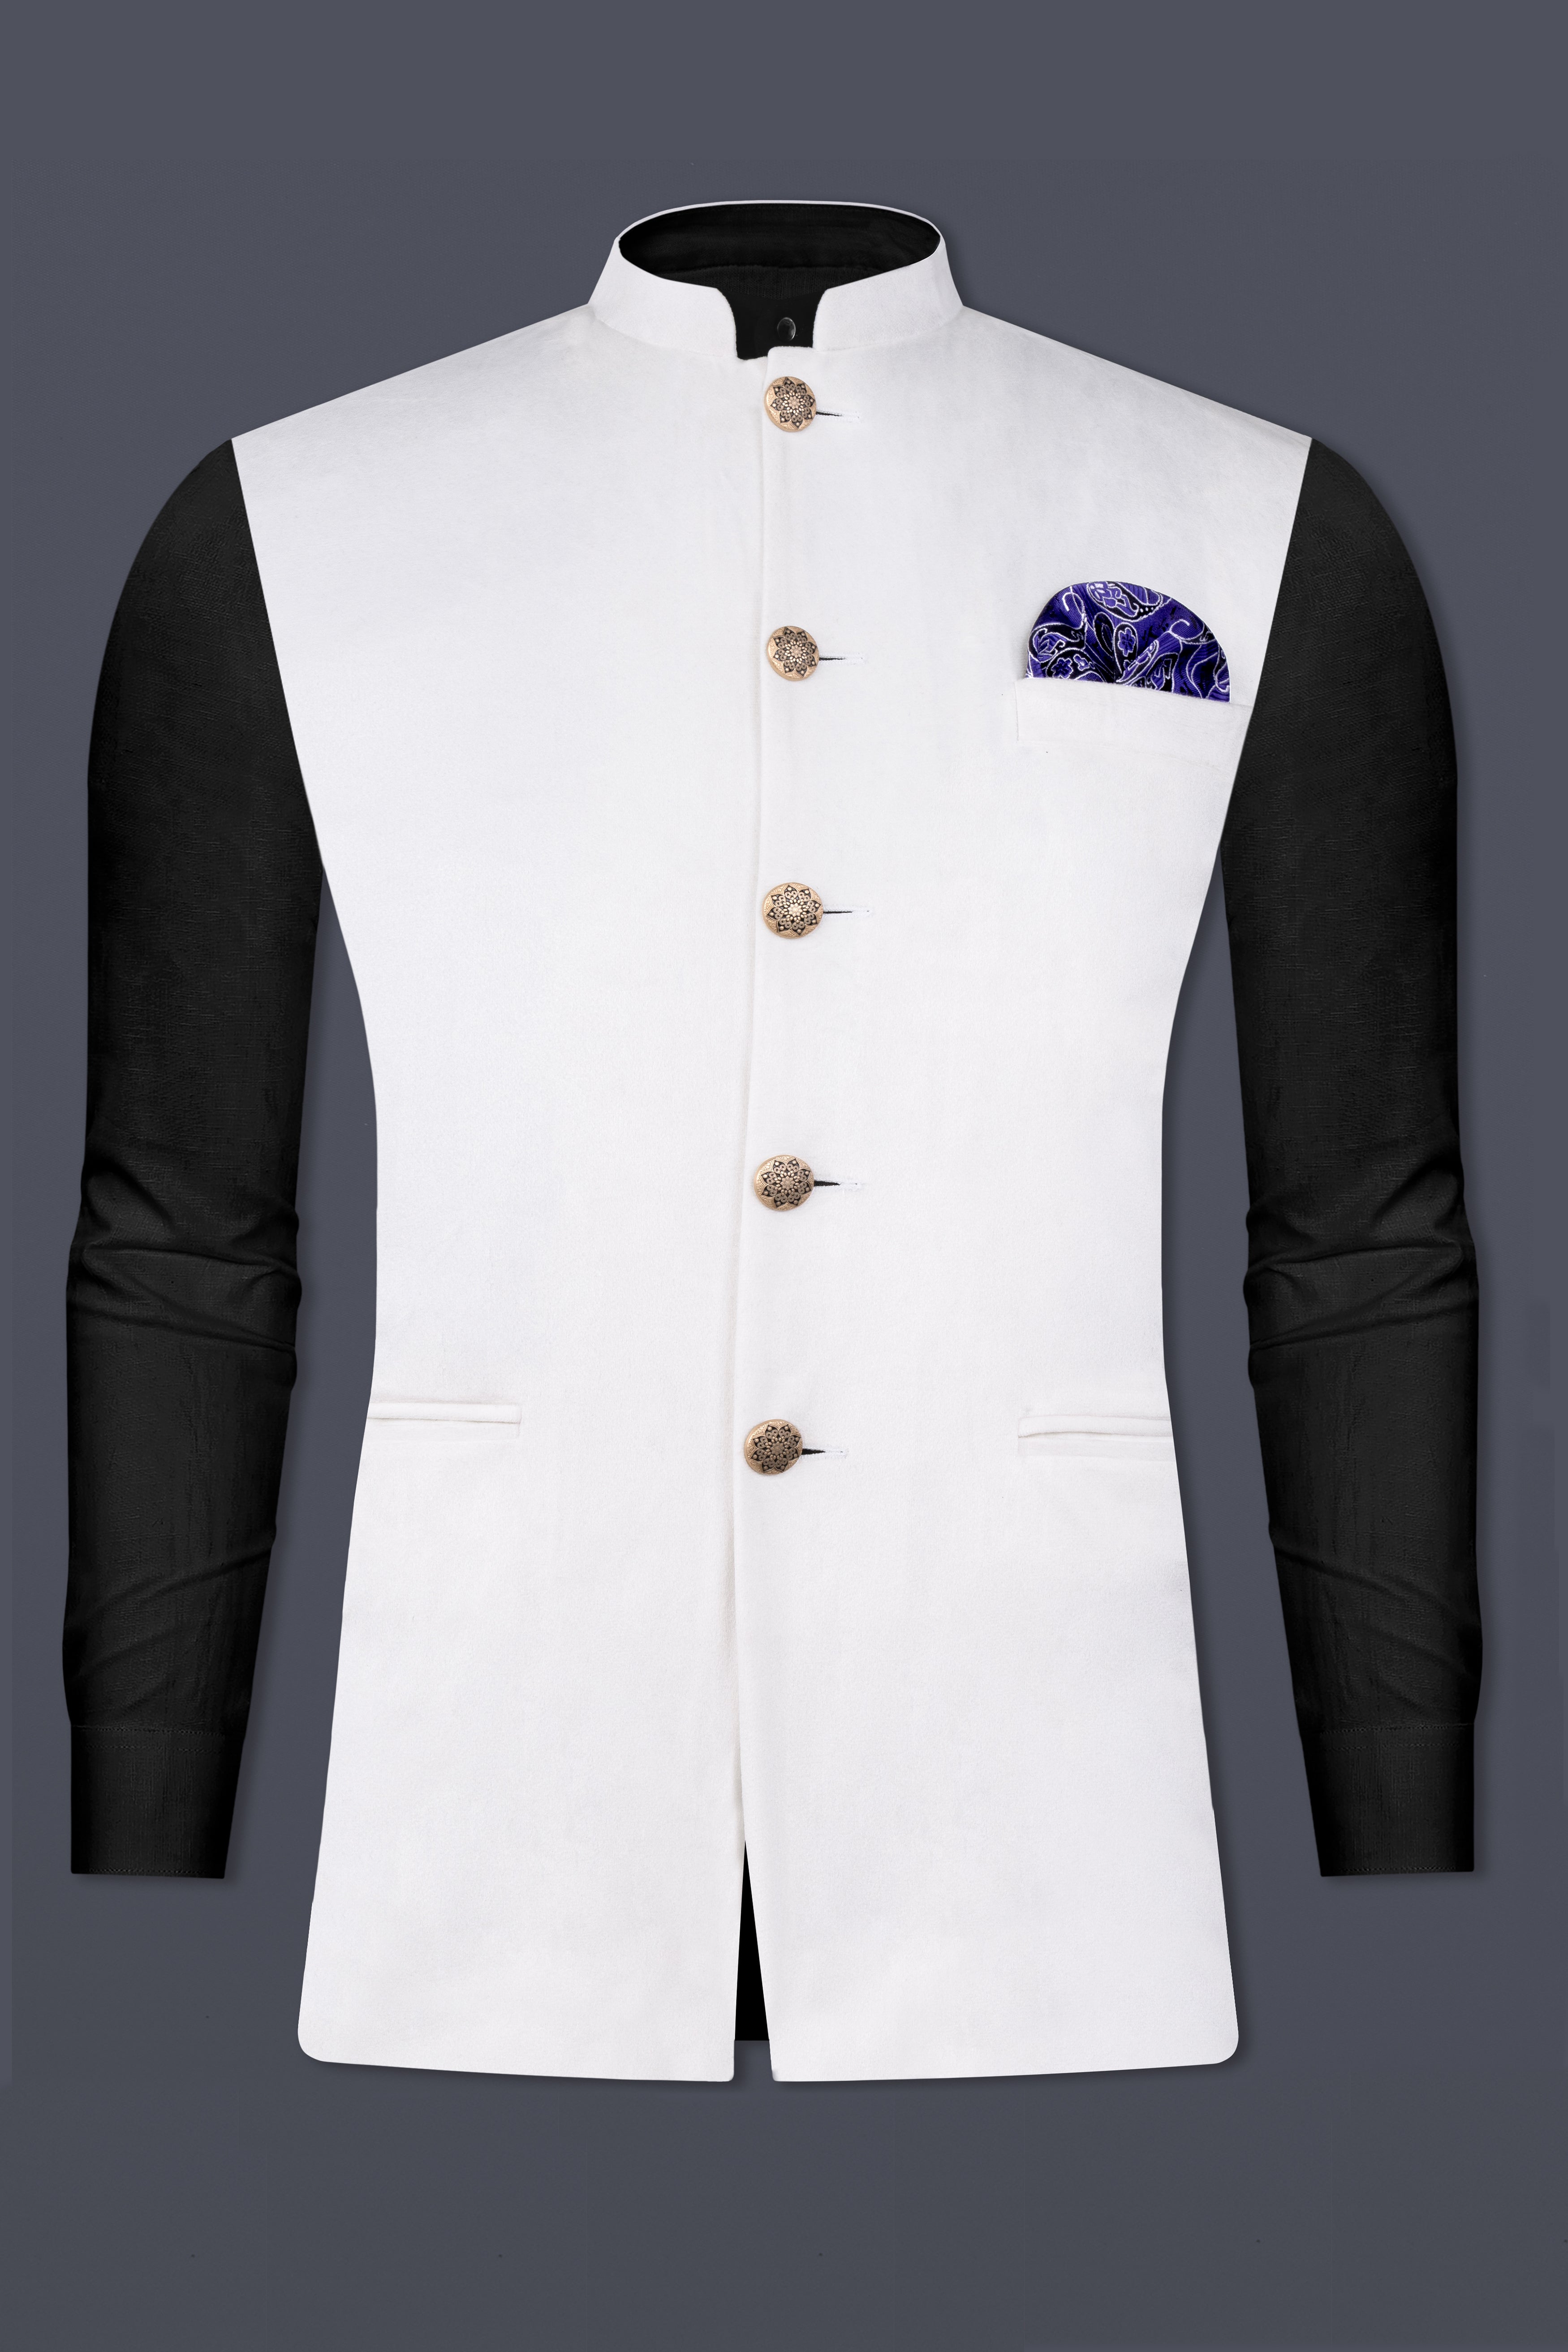 ZAREENVALA Men No-16 Jawahar-Cut Nehru Jacket Business Formal Slim Fit  Dress (Blue Jacket, XXS) at Amazon Men's Clothing store